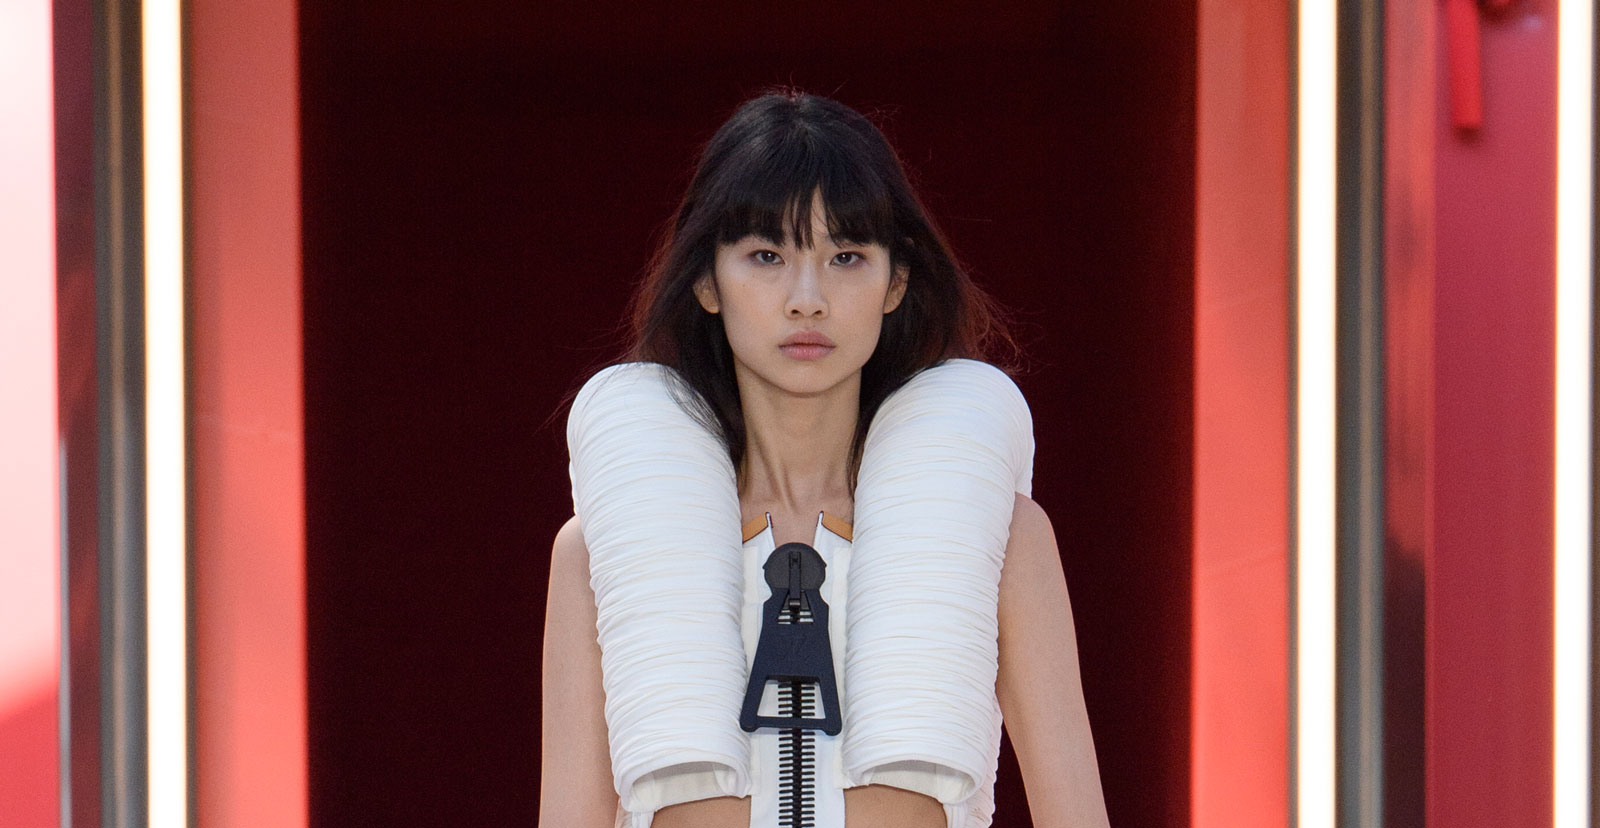 Jung Ho-yeon opens Louis Vuitton show at Paris Fashion Week